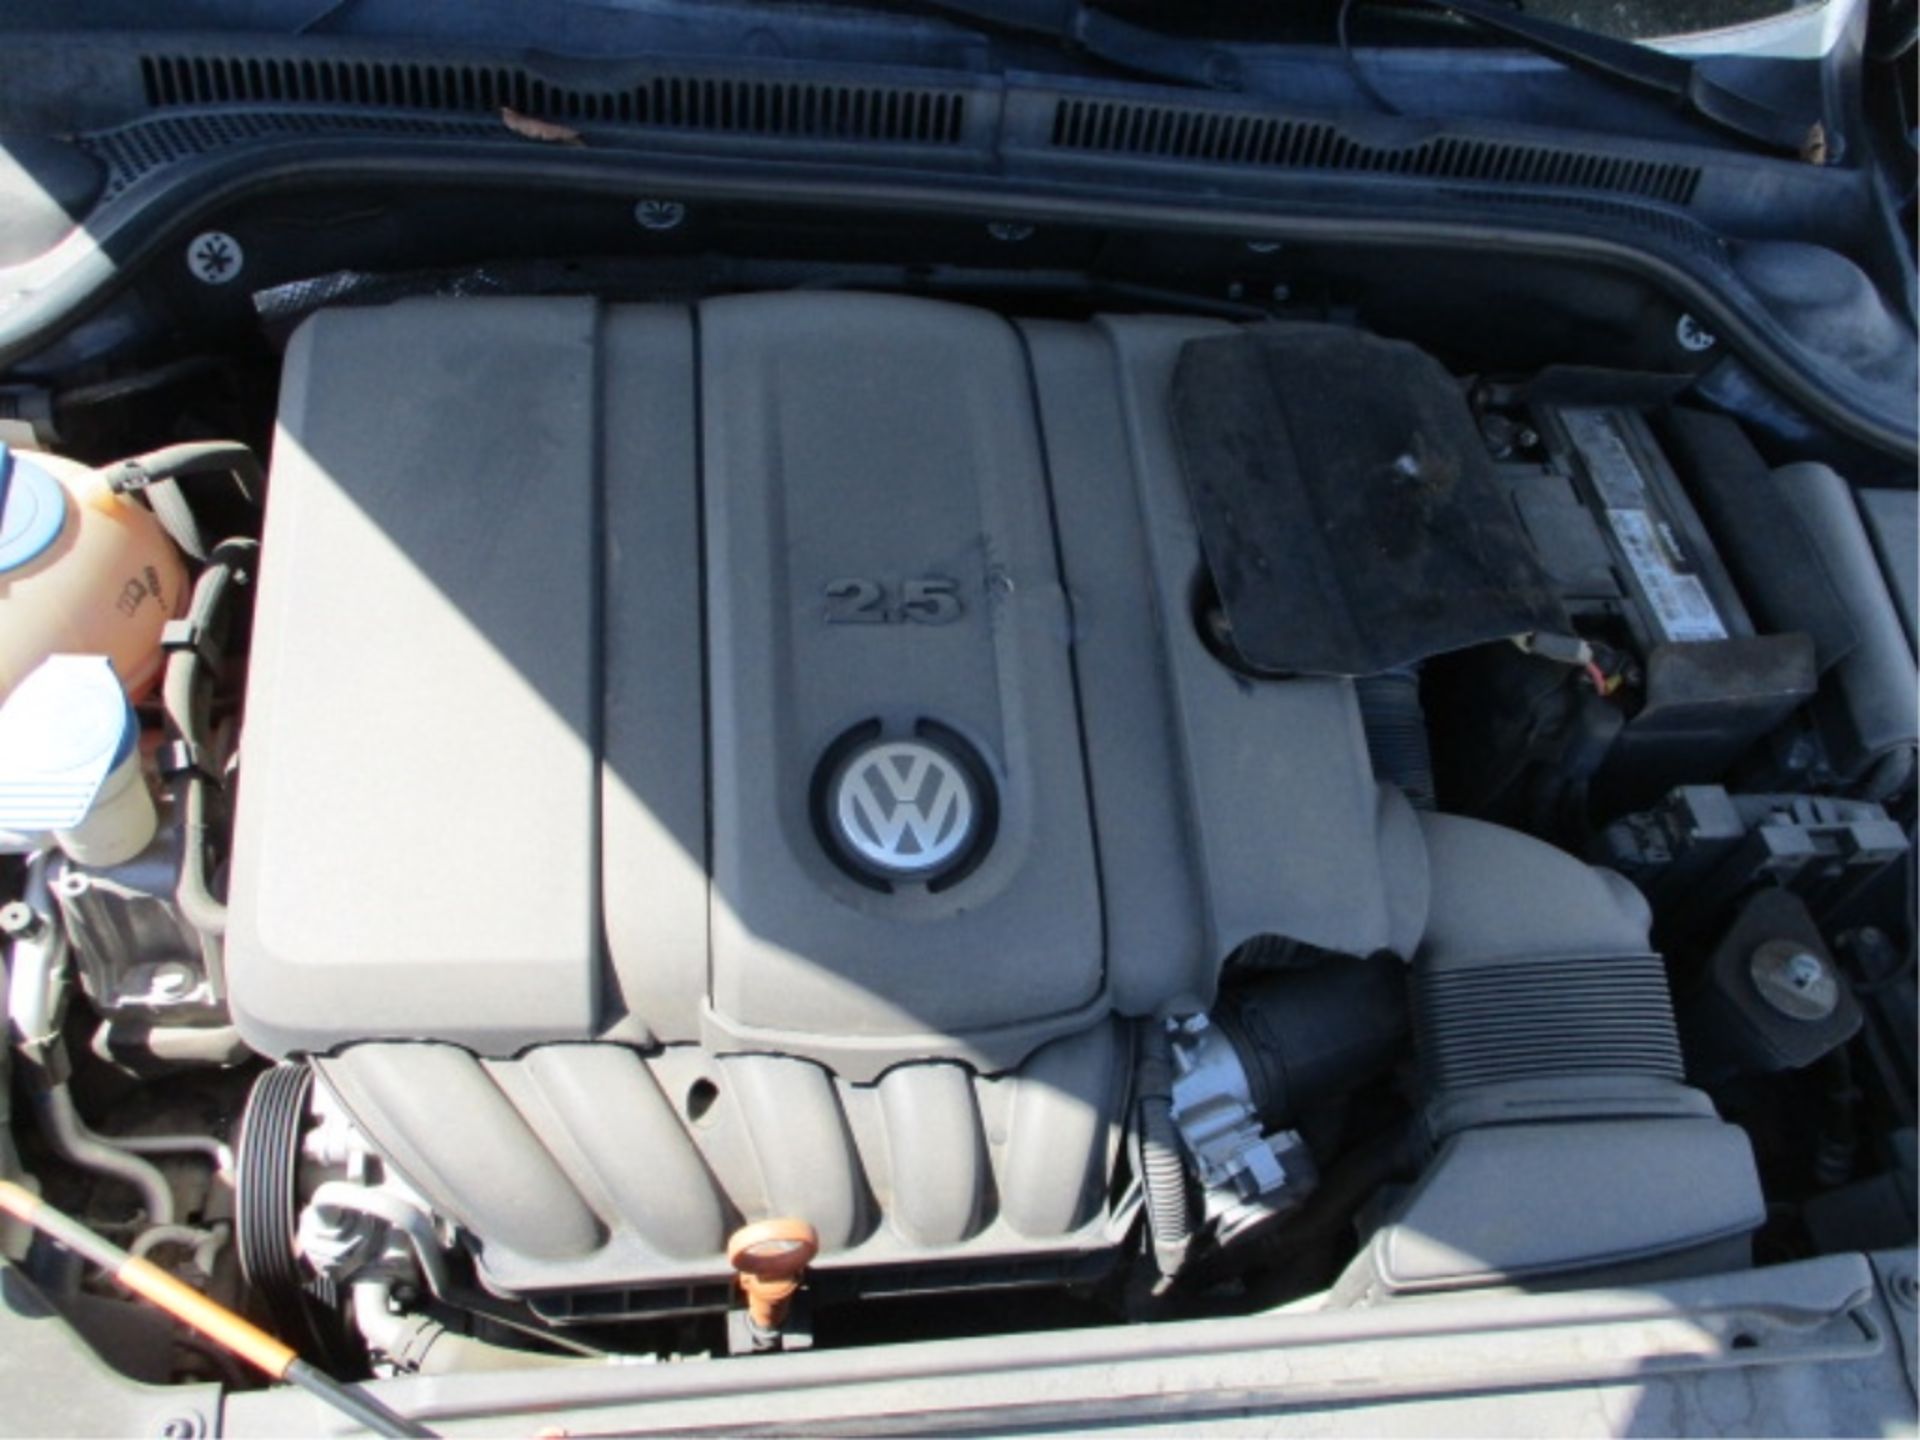 2012 Volkswagen Jetta Sedan, 2.5L Gas, Automatic, S/N: 3VWDP7AJ6CM345626, Mile/Hours - 82277 - Image 28 of 40